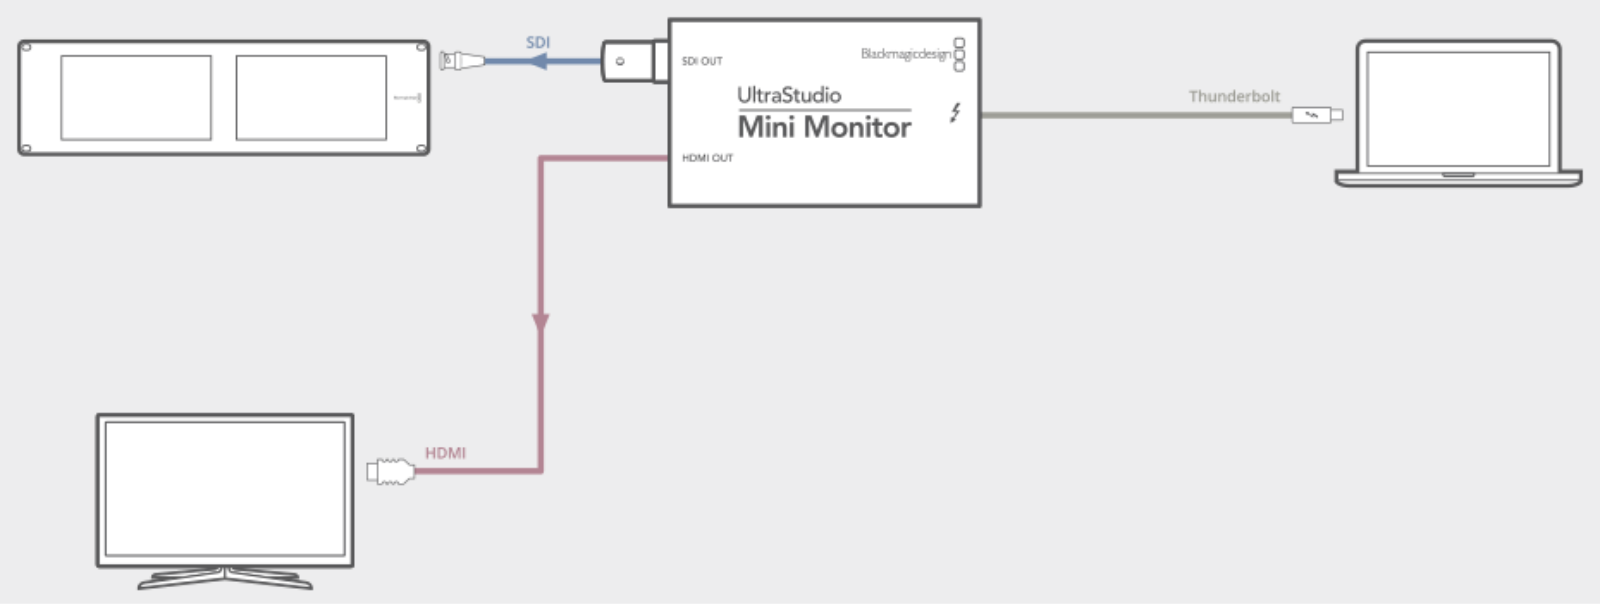 Blackmagic Design UltraStudio Mini Monitor Diagram